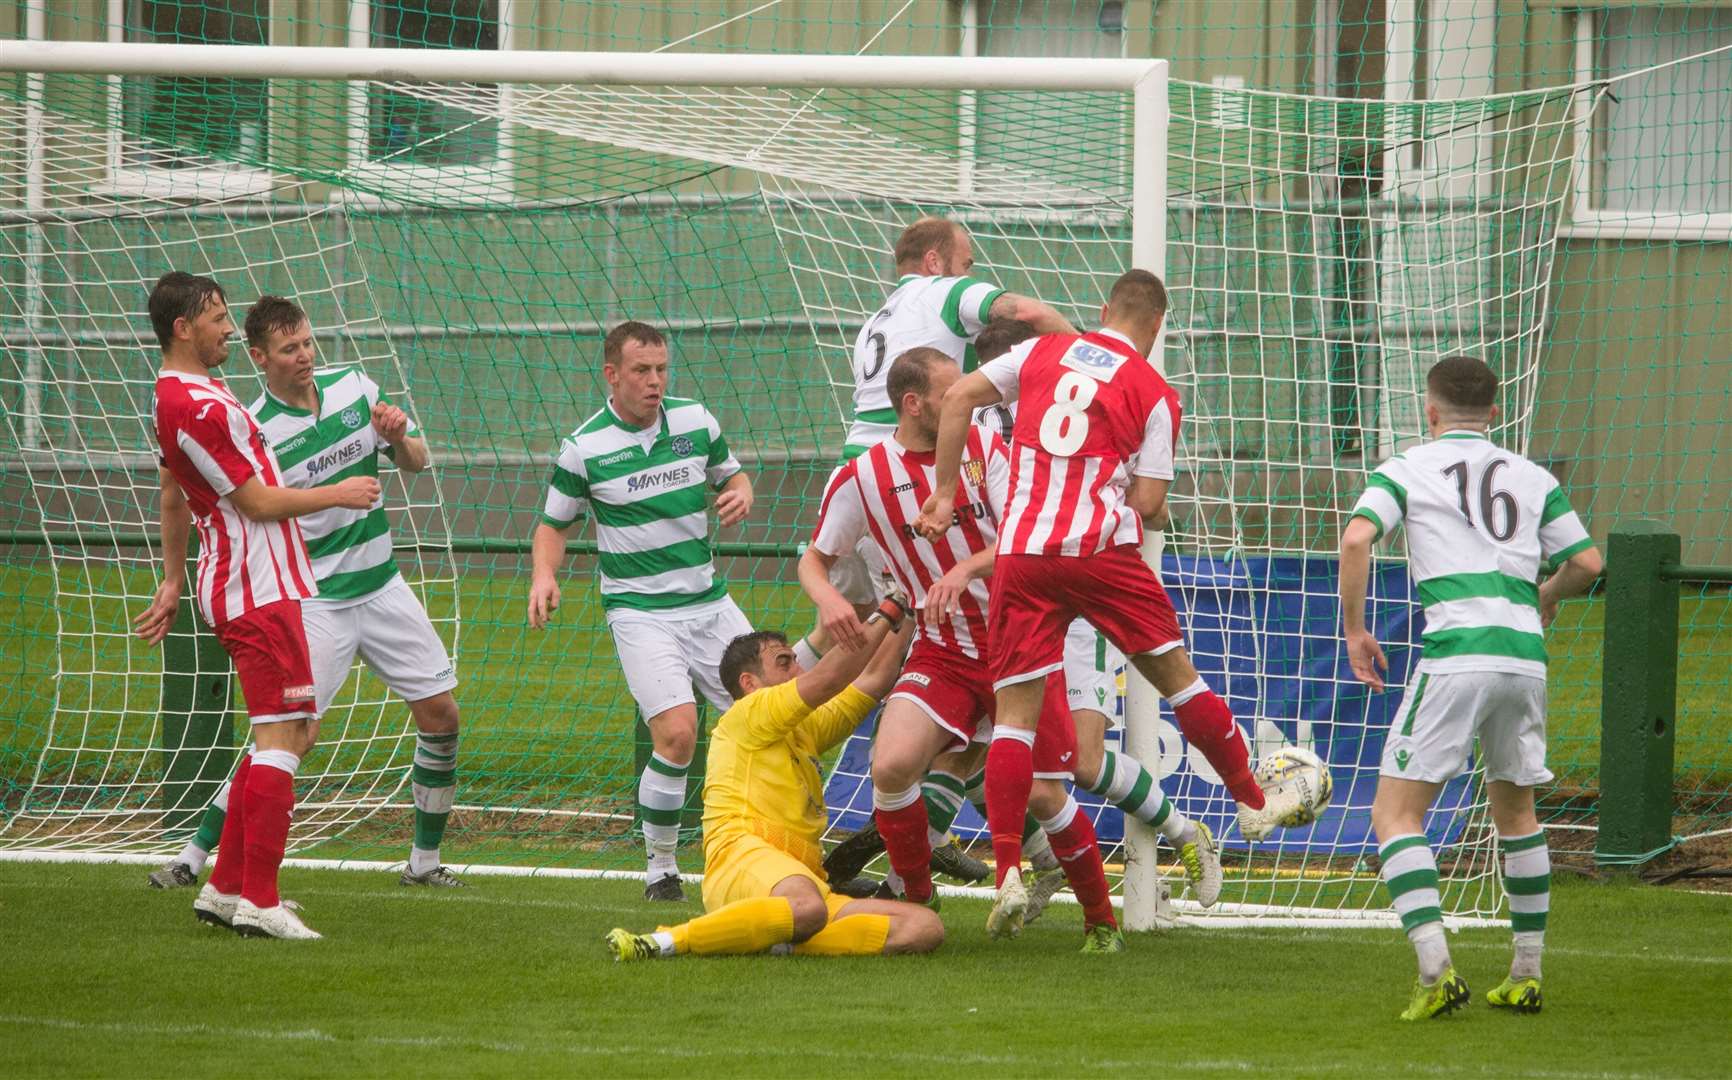 A goalmouth scramble as Buckie repel a Formartine attack. Pic: Allan Robertson